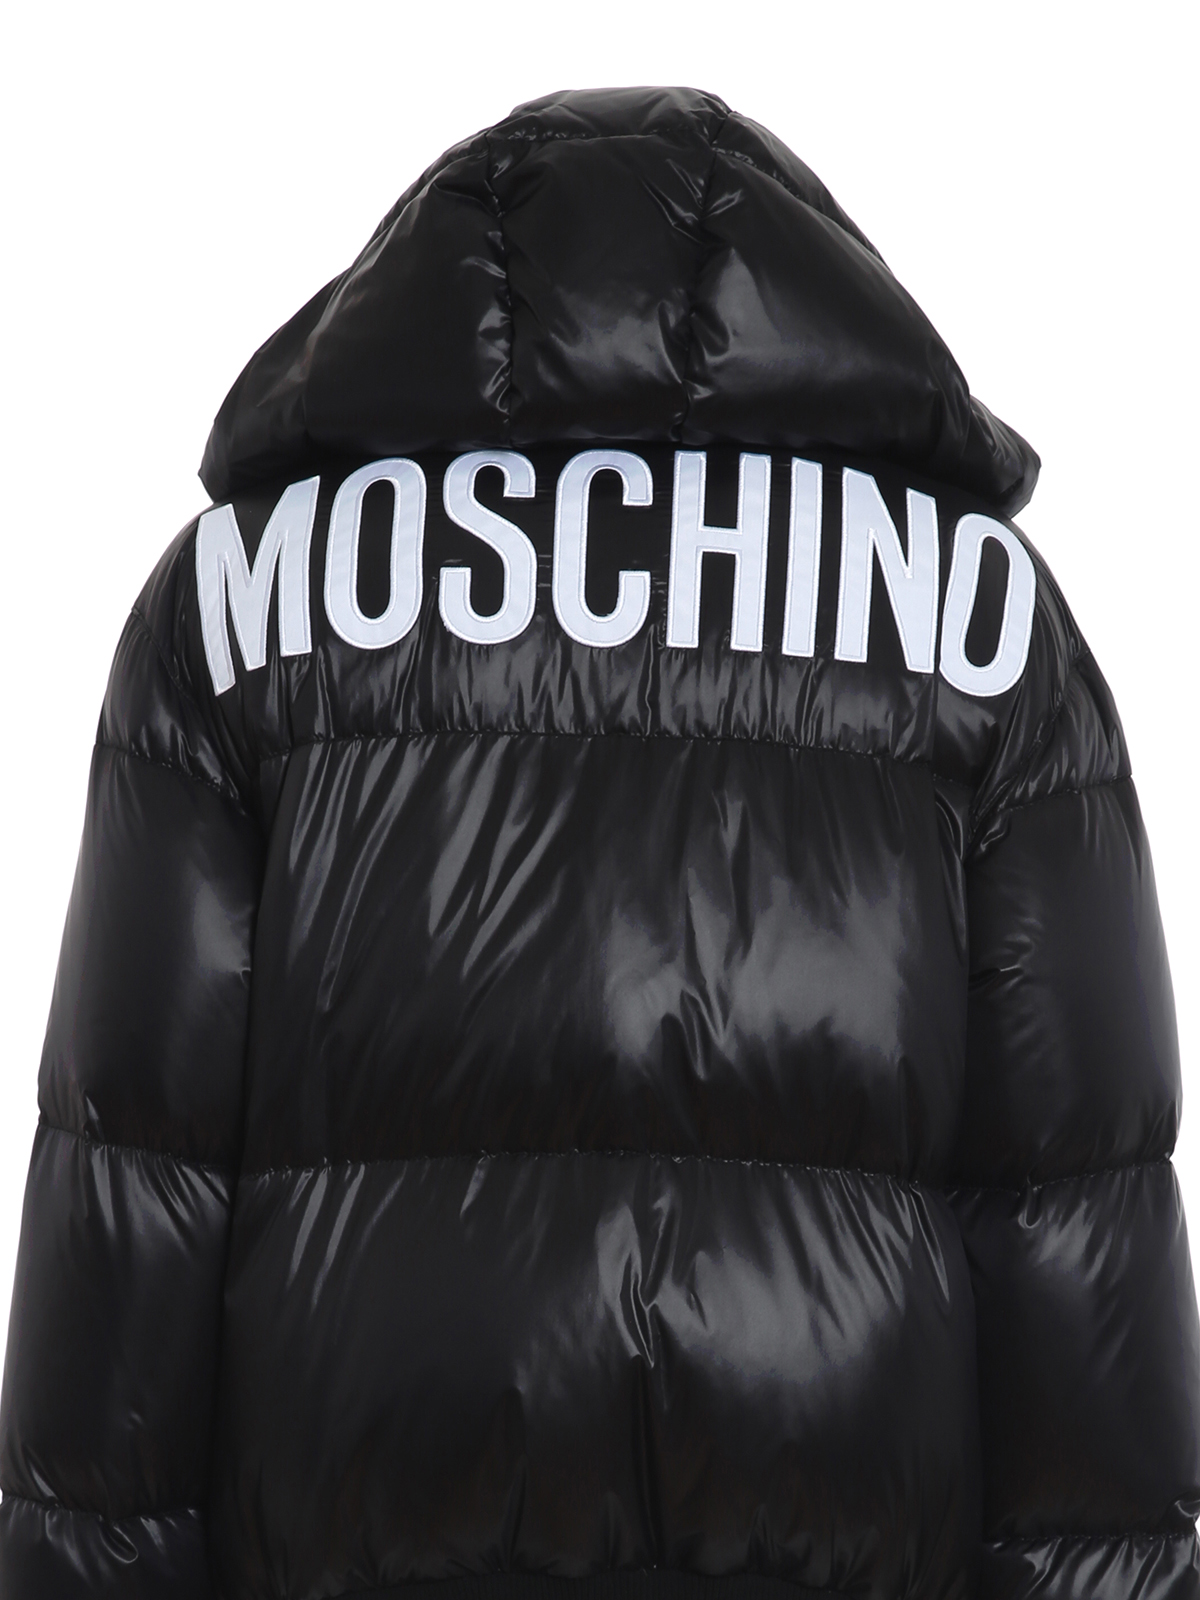 caress Backward Watt Padded jackets Moschino - Hooded puffer jacket - 052655172555 | iKRIX.com